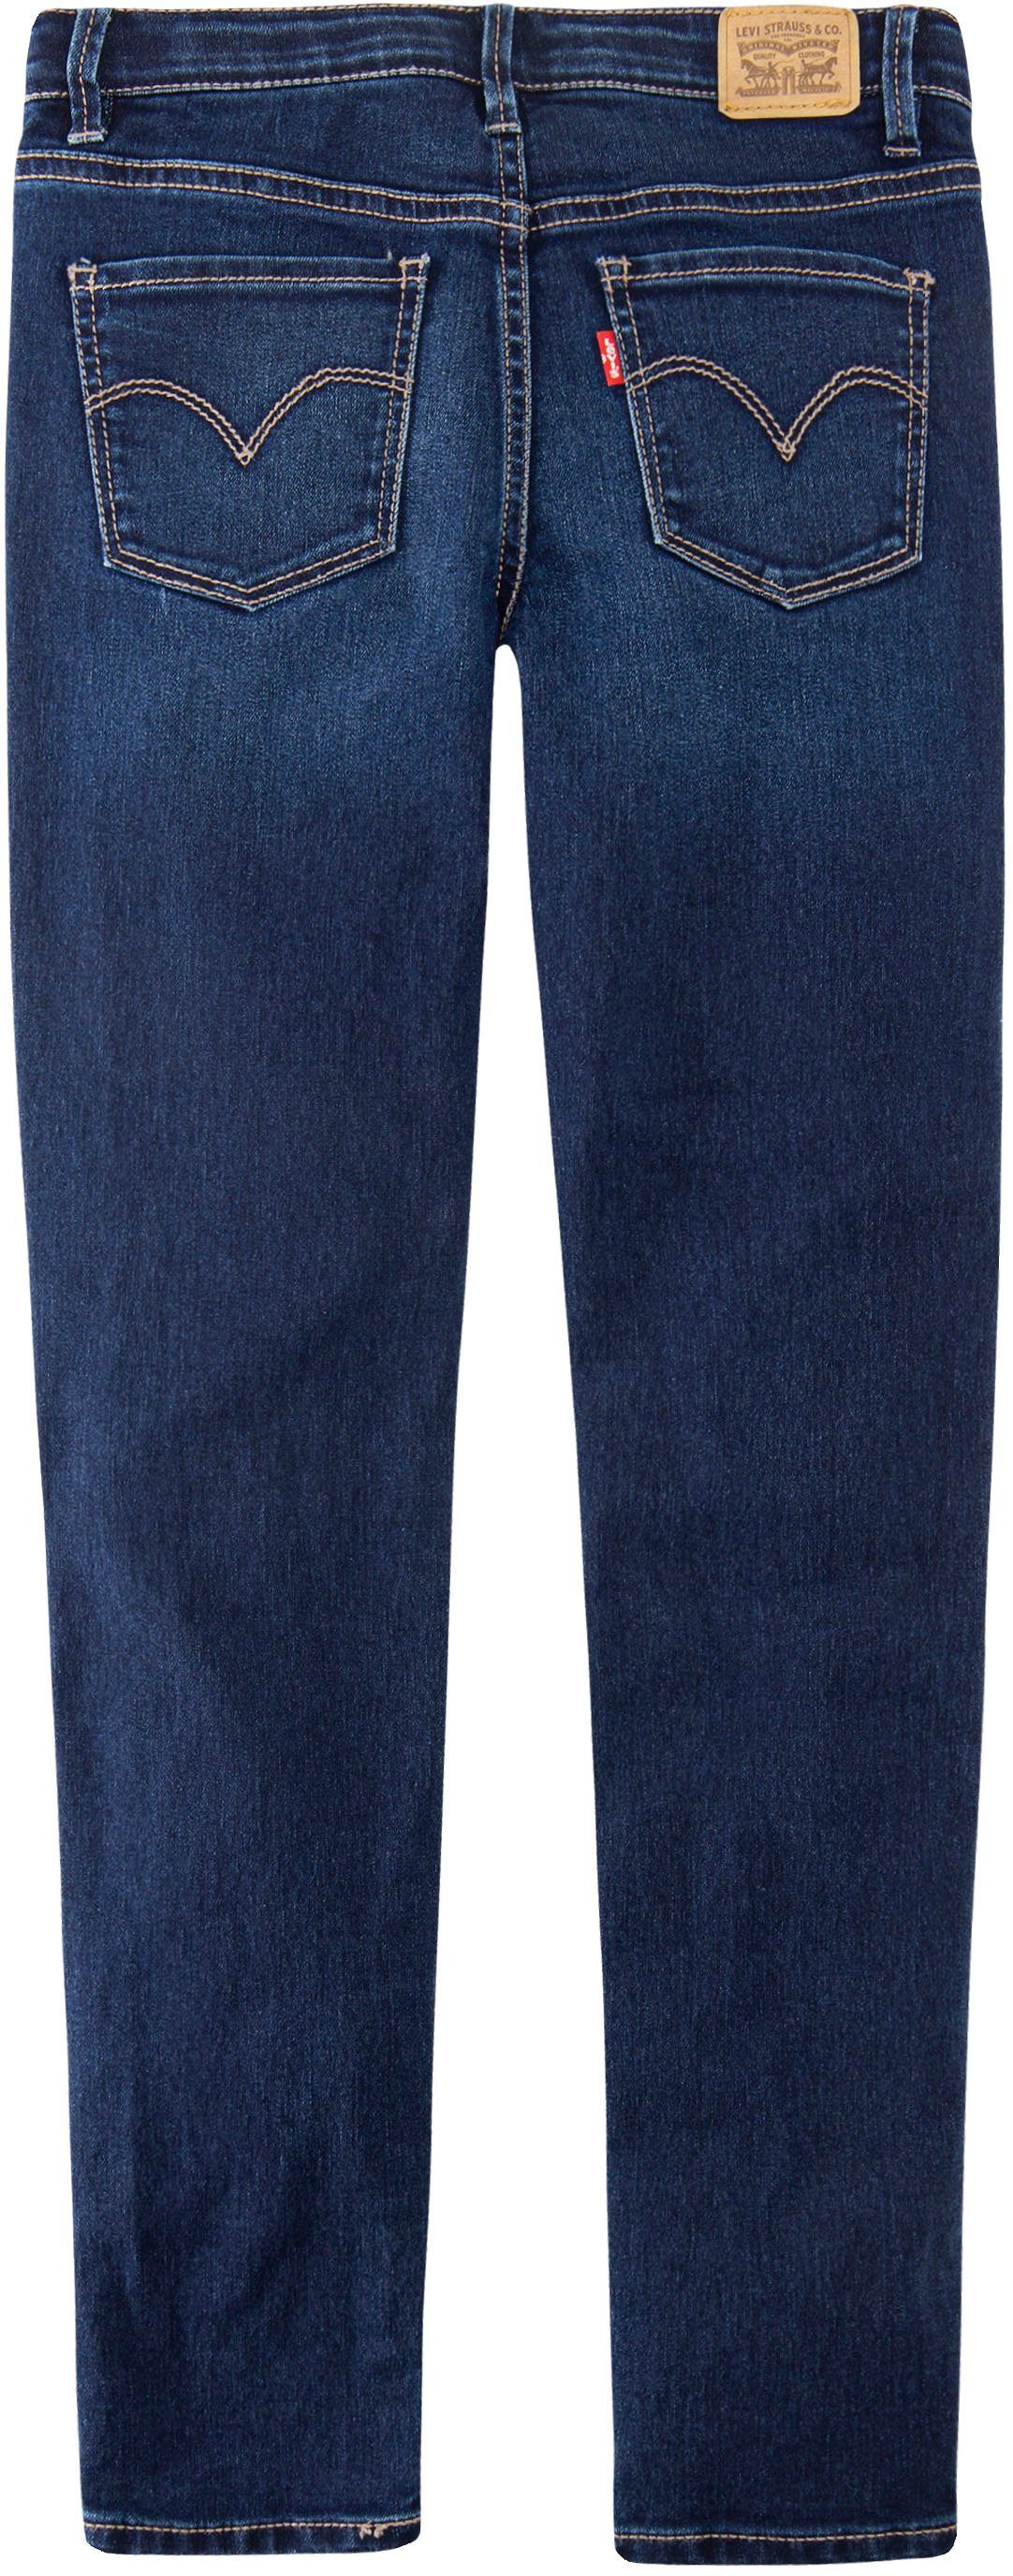 Stretch-Jeans SKINNY JEANS 710™ GIRLS SUPER used dark blue Kids Levi's® denim FIT for